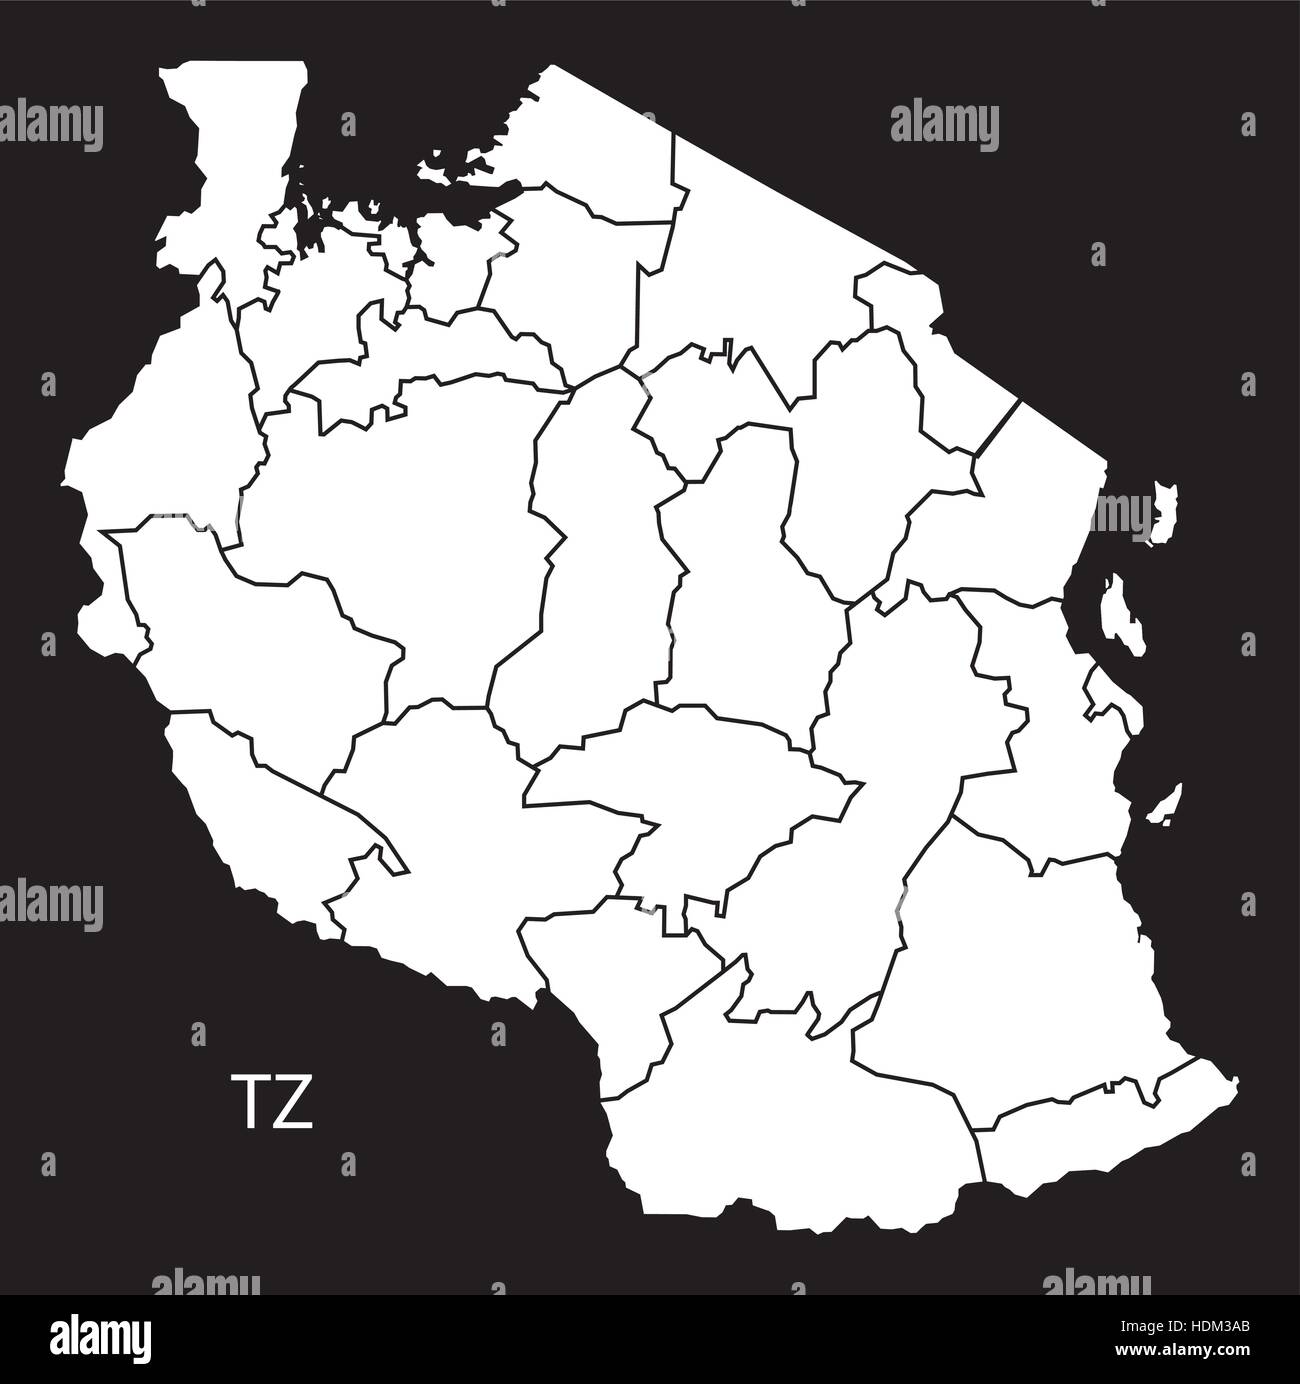 Tanzania regions Map black and white illustration Stock Vector